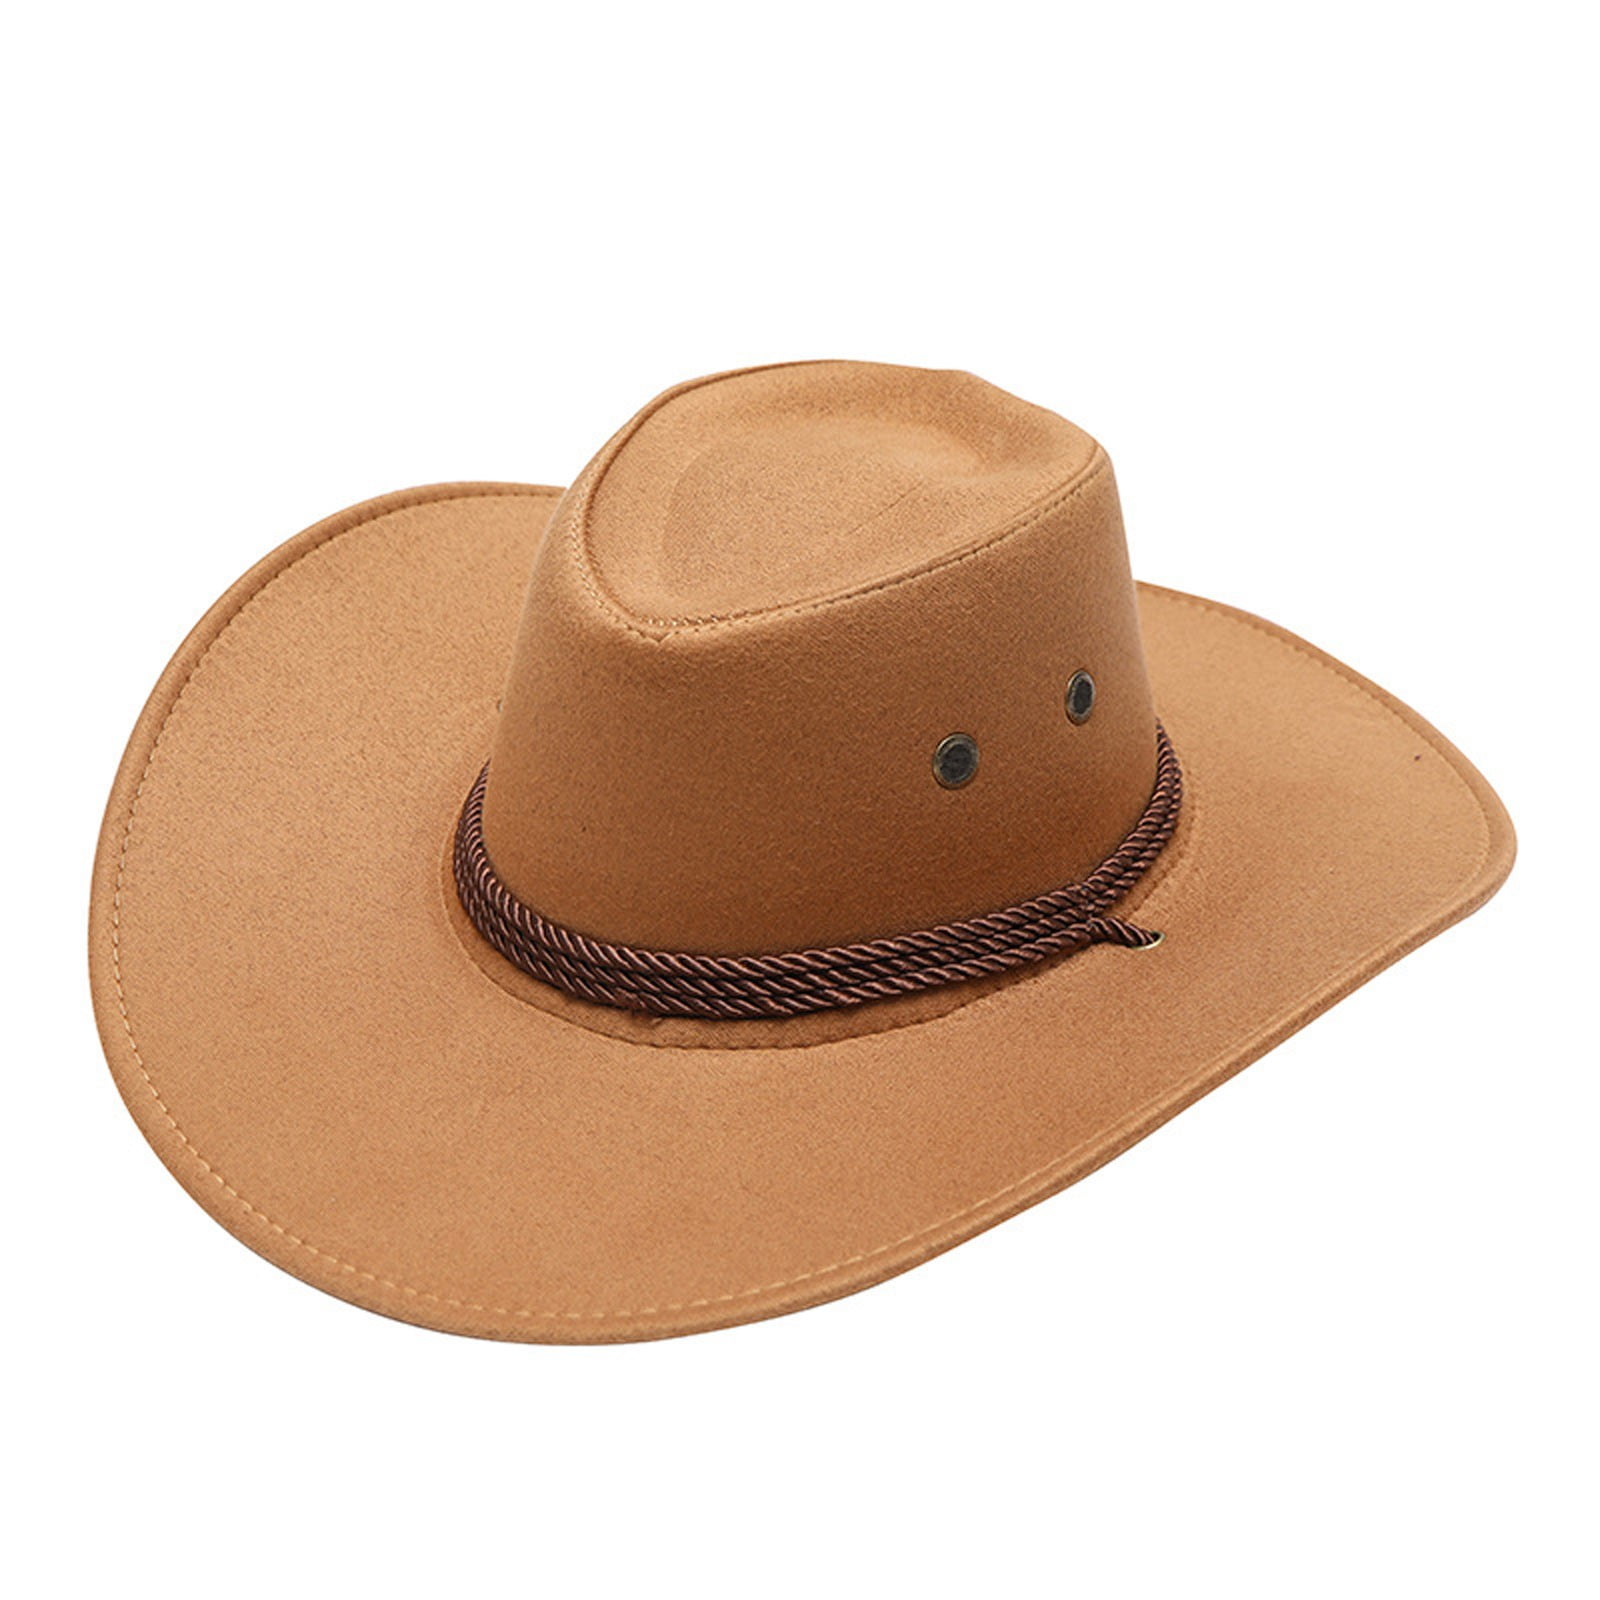 Western Hatbands Outback Hats for Men Oilskin Adult Casual Solid